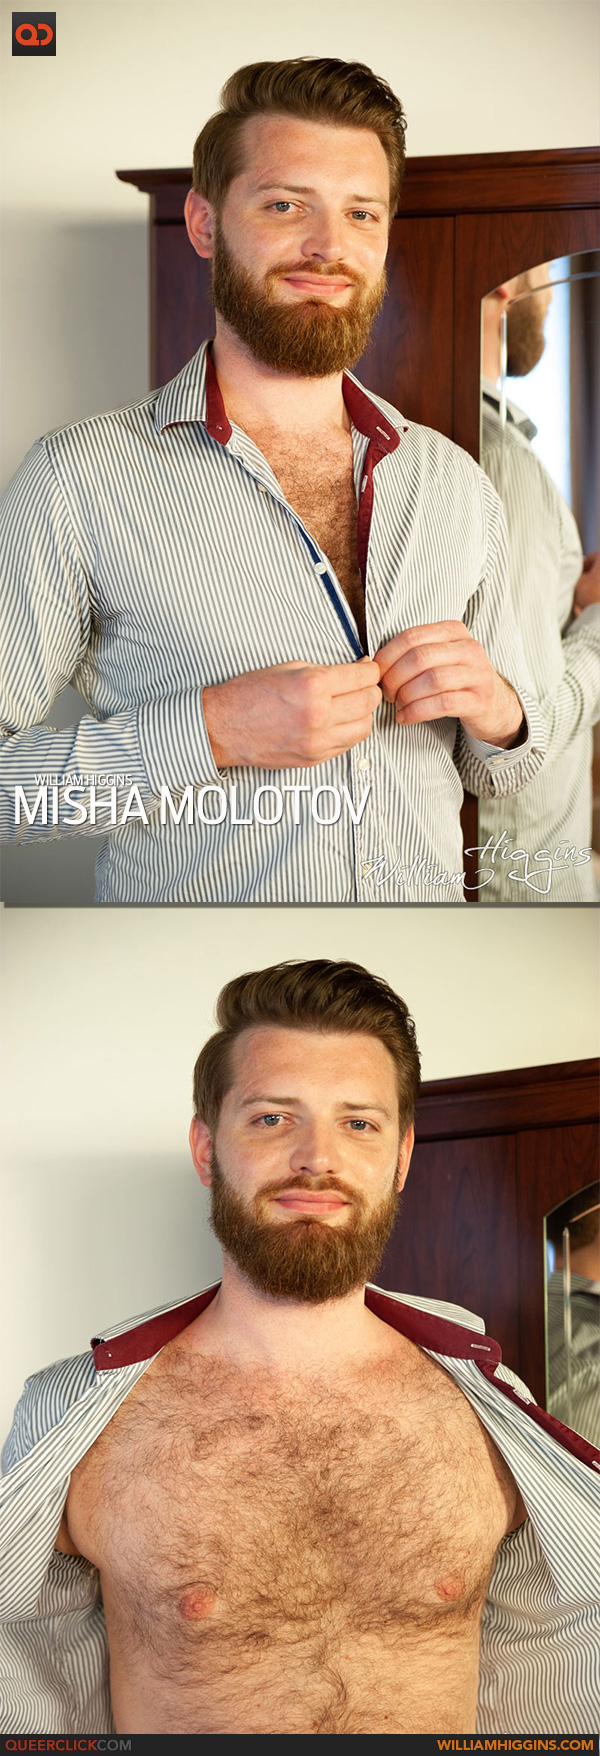 William Higgins: Misha Molotov